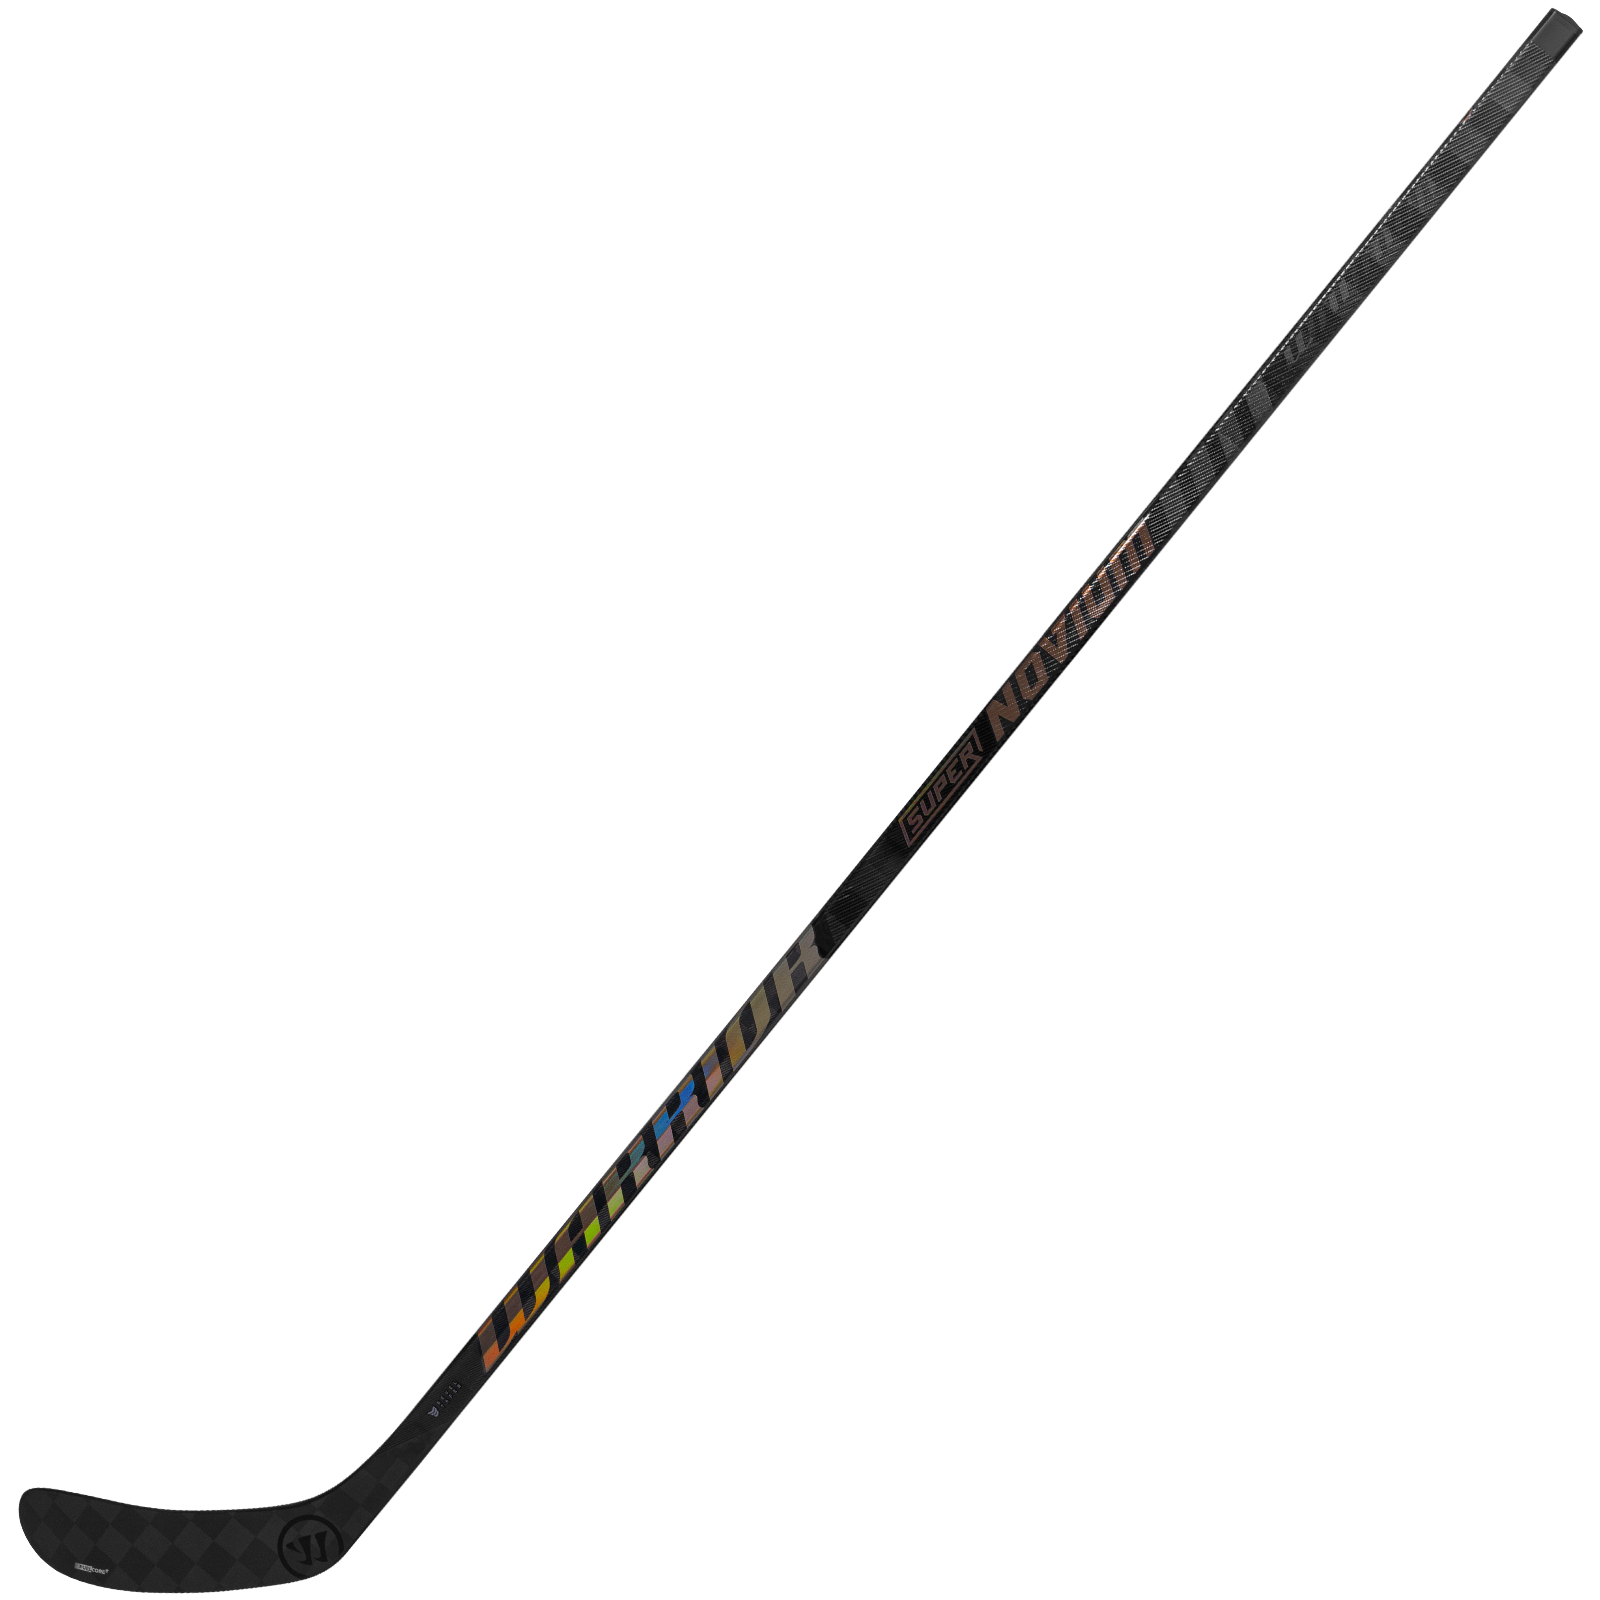 Warrior Super Novium Intermediate Hockey Stick